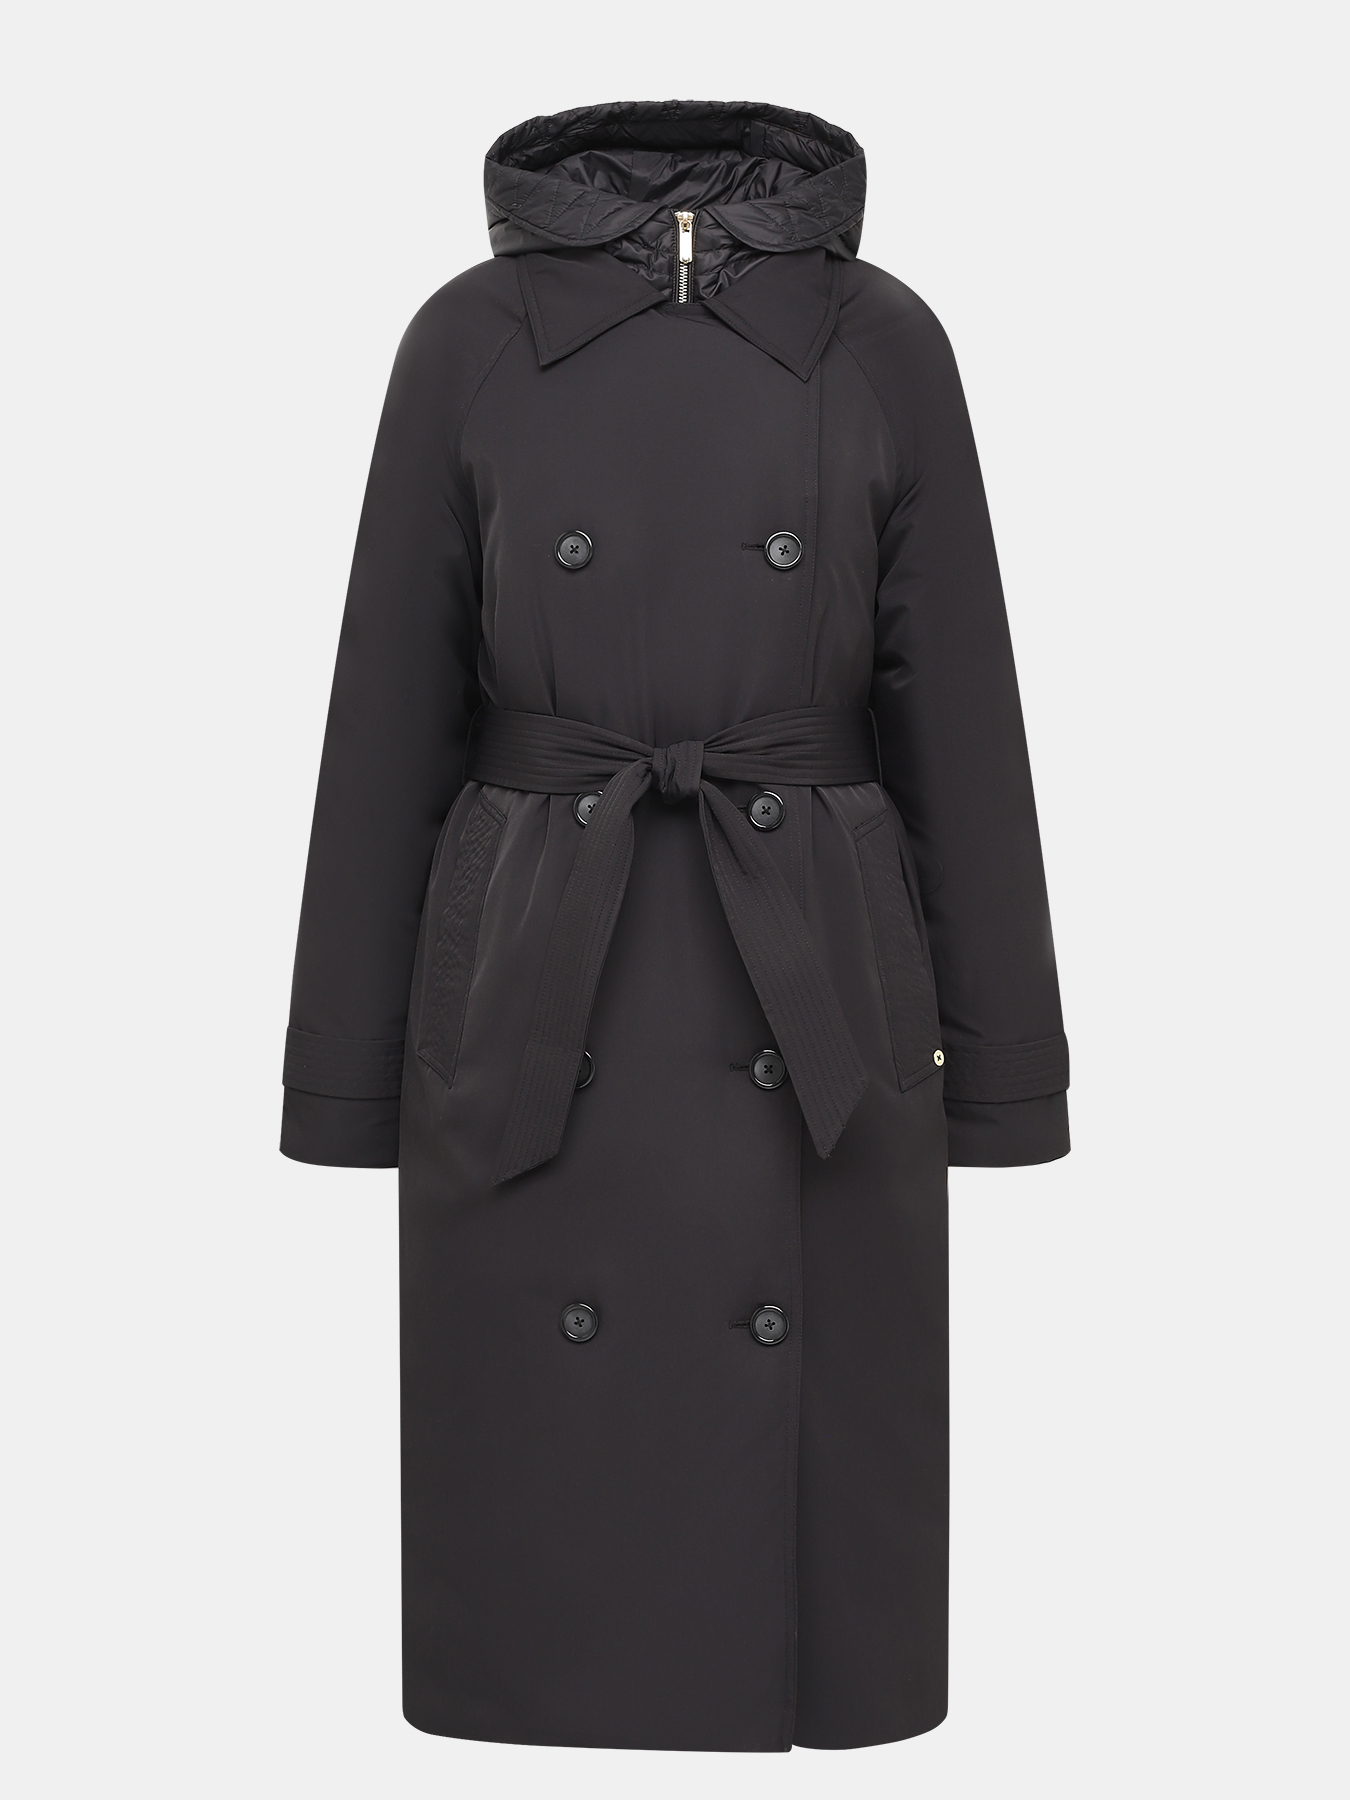 Пальто зимнее Pennyblack 421355-023, цвет черный, размер 46